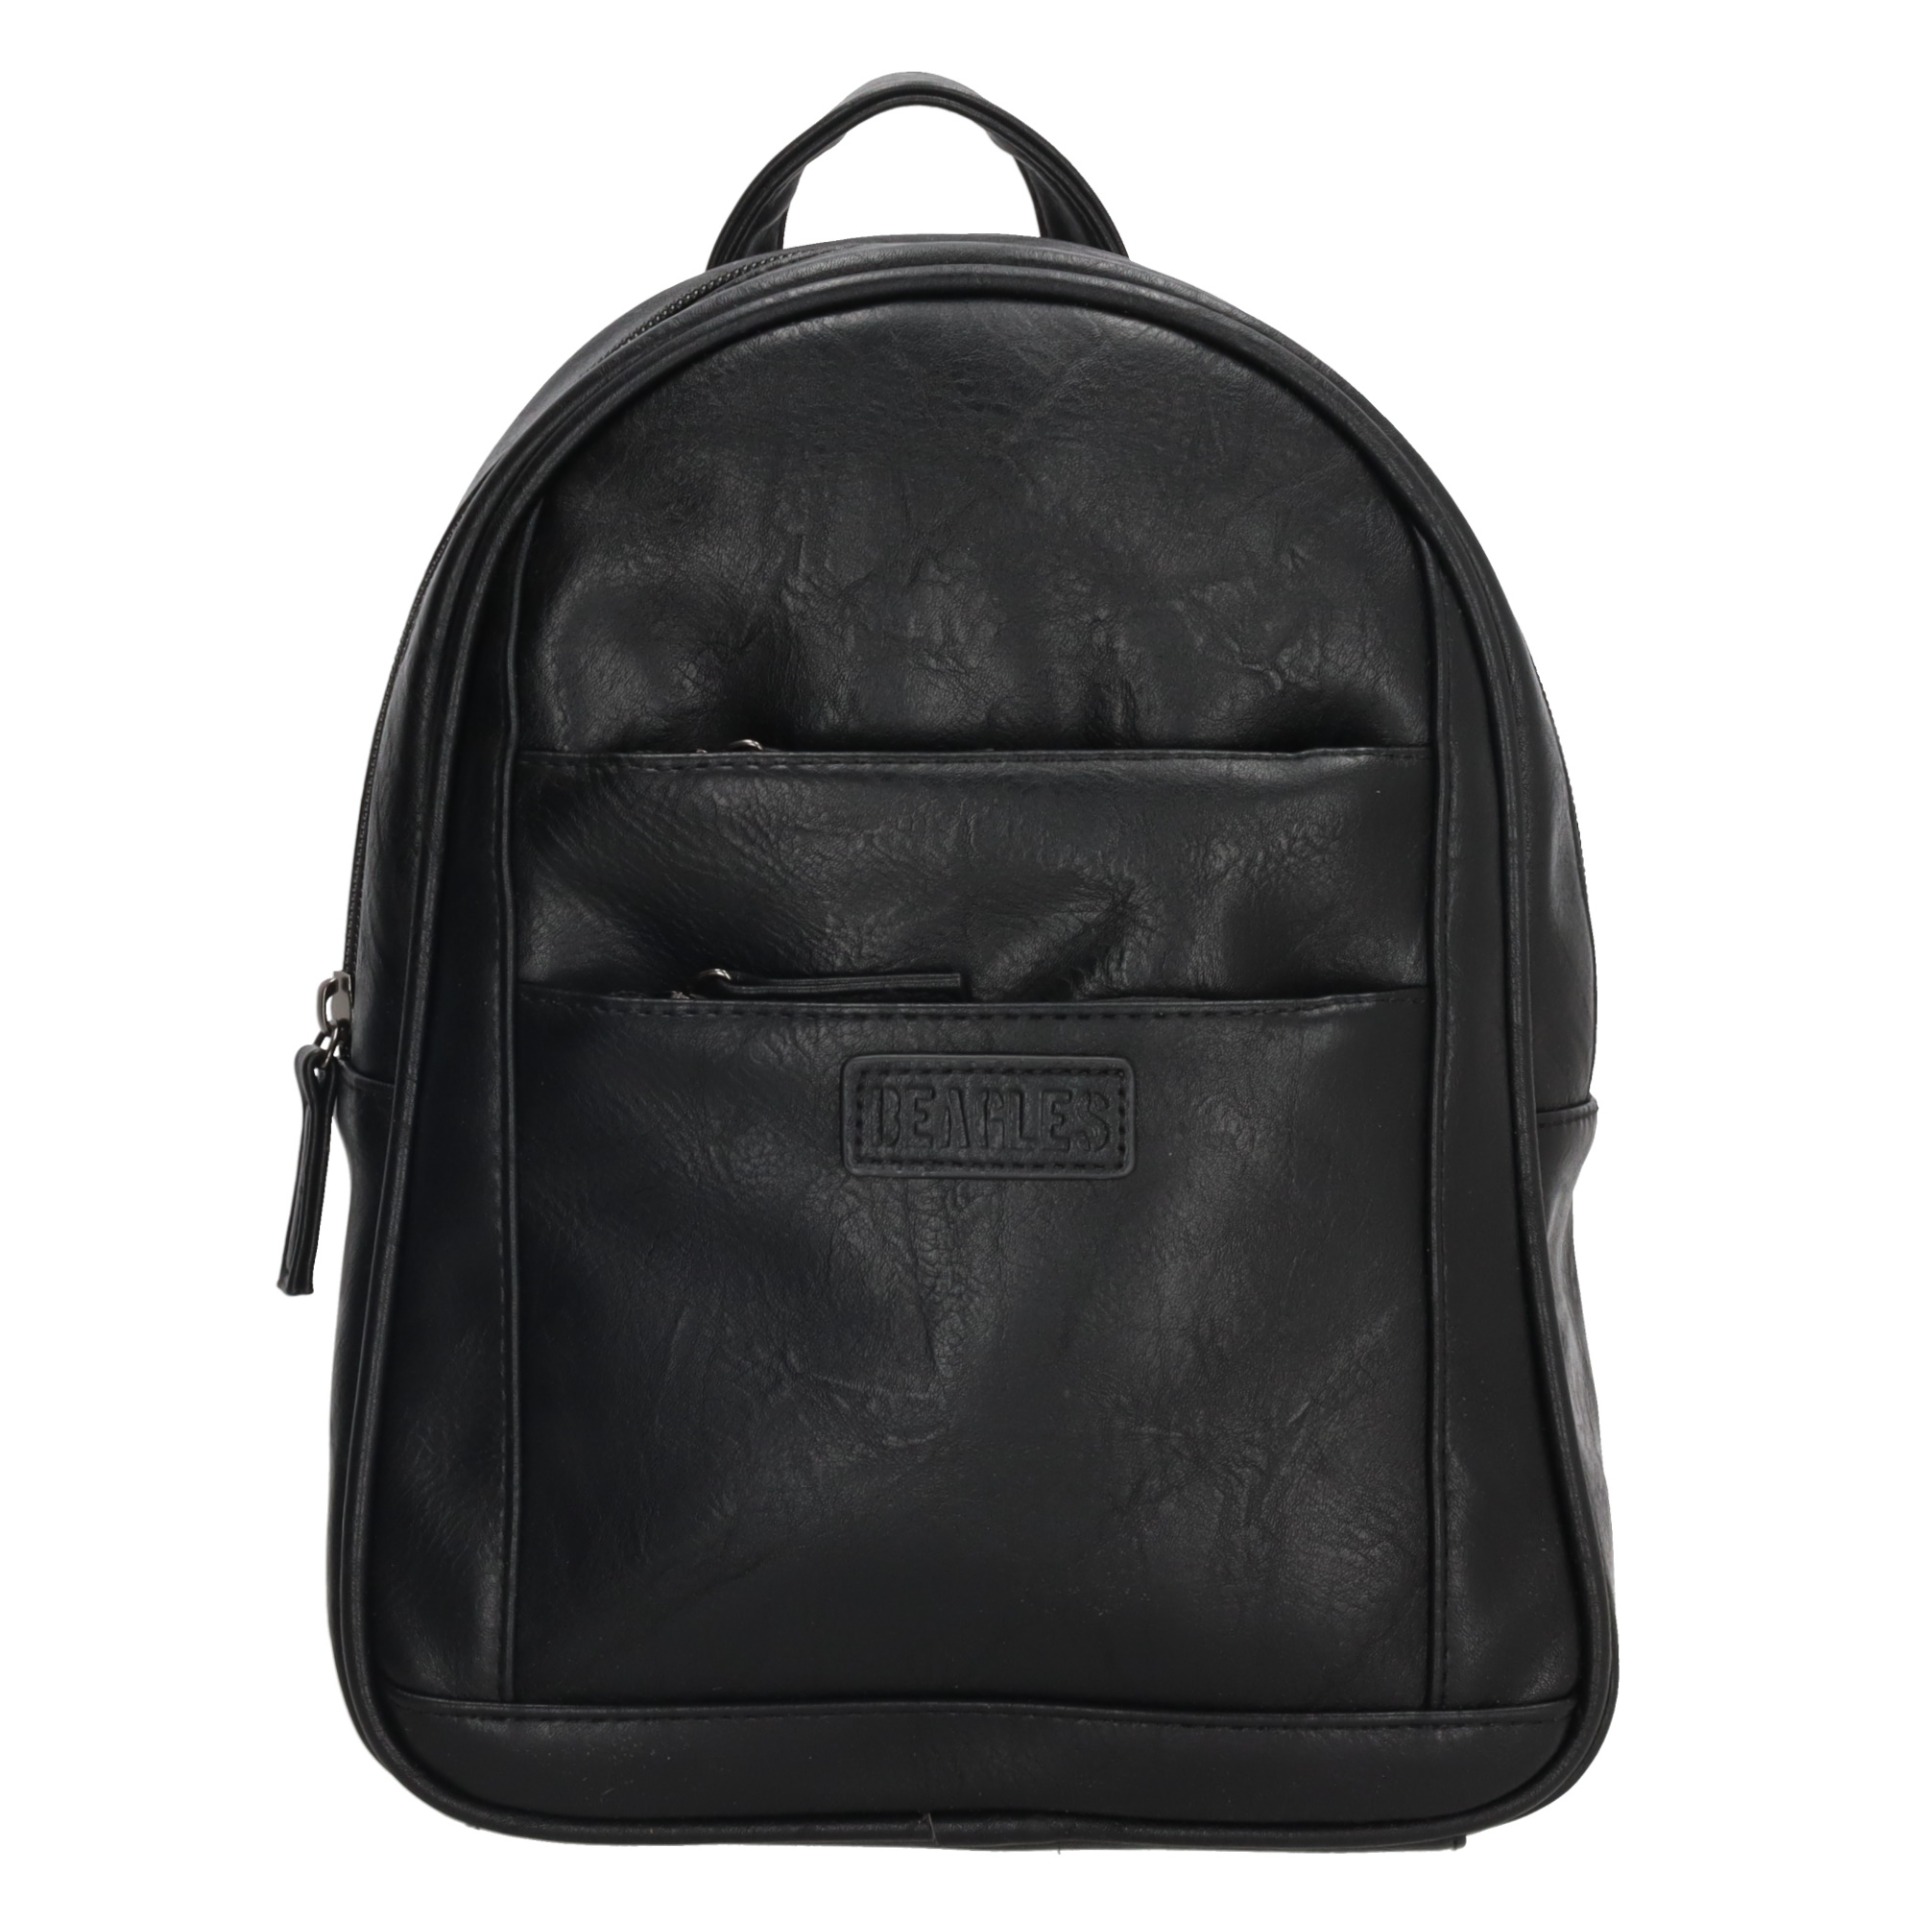 E-shop Beagles Murcia Backpack 2 l Black